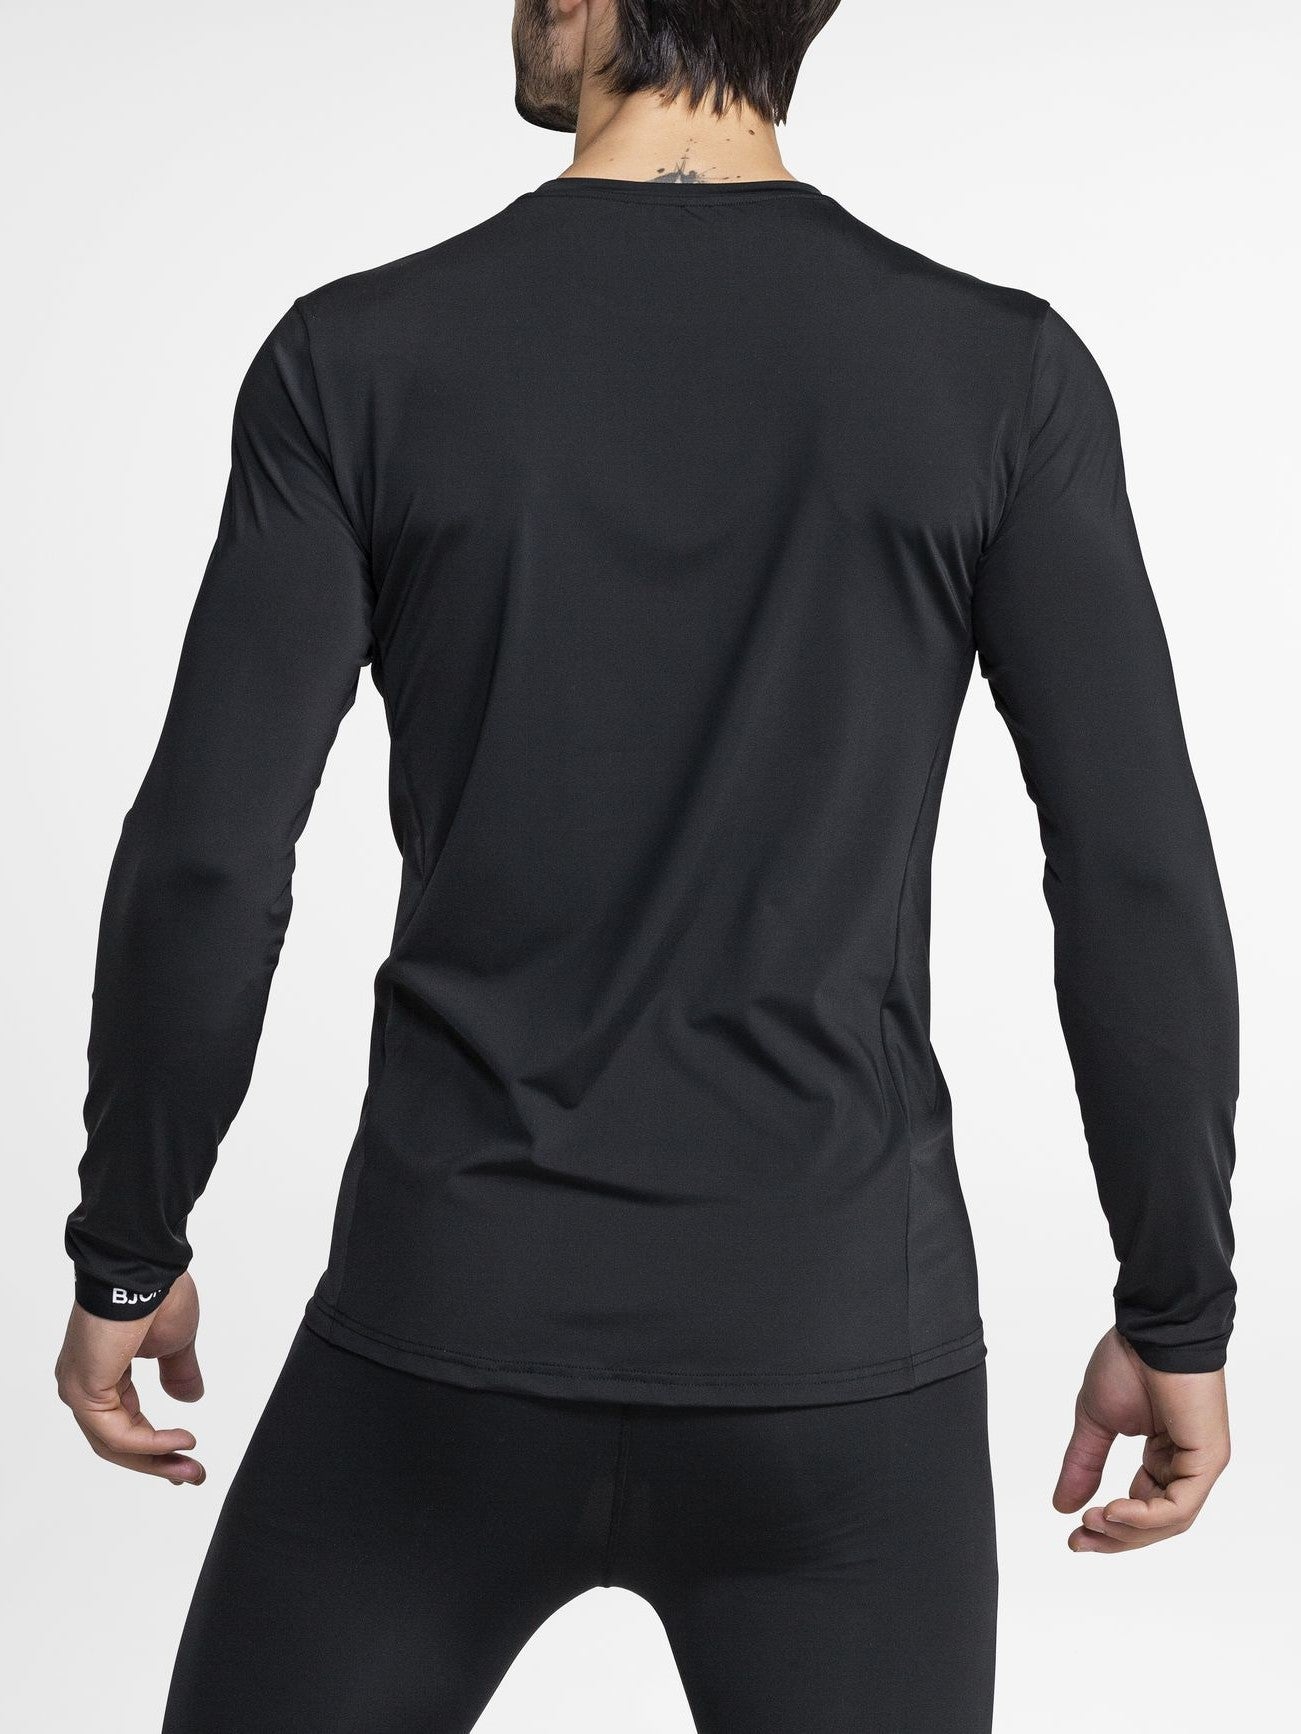 BJORN BORG Hamilton Performance Long Sleeve Base Layer Top Black - Activemen Clothing